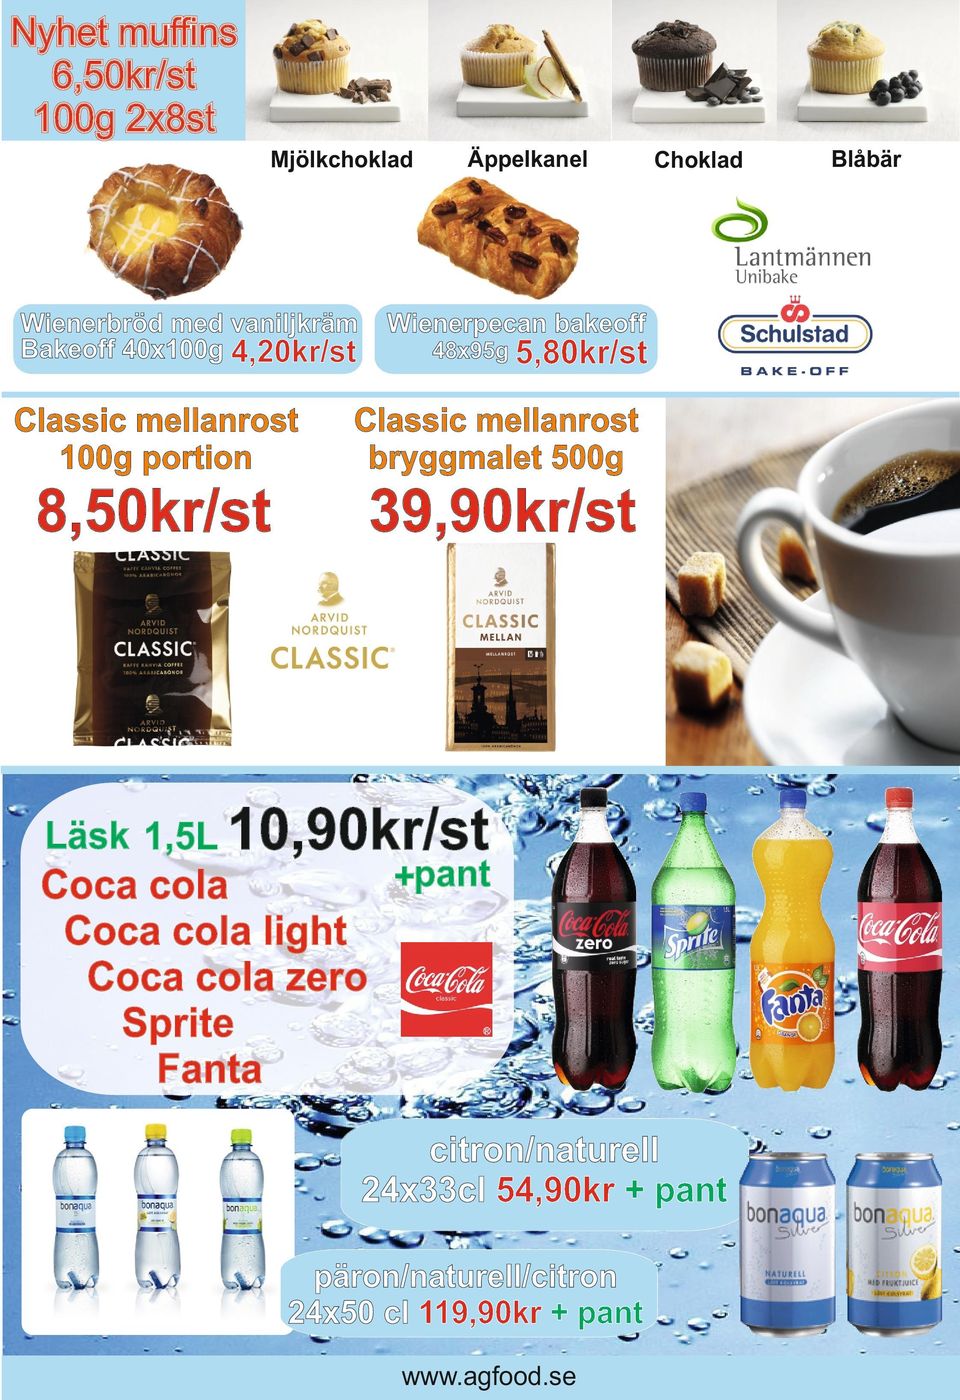 mellanrost bryggmalet 500g 8,50kr/st 39,90kr/st Läsk 1,5L 10,90kr/st +pant Coca cola Coca cola light